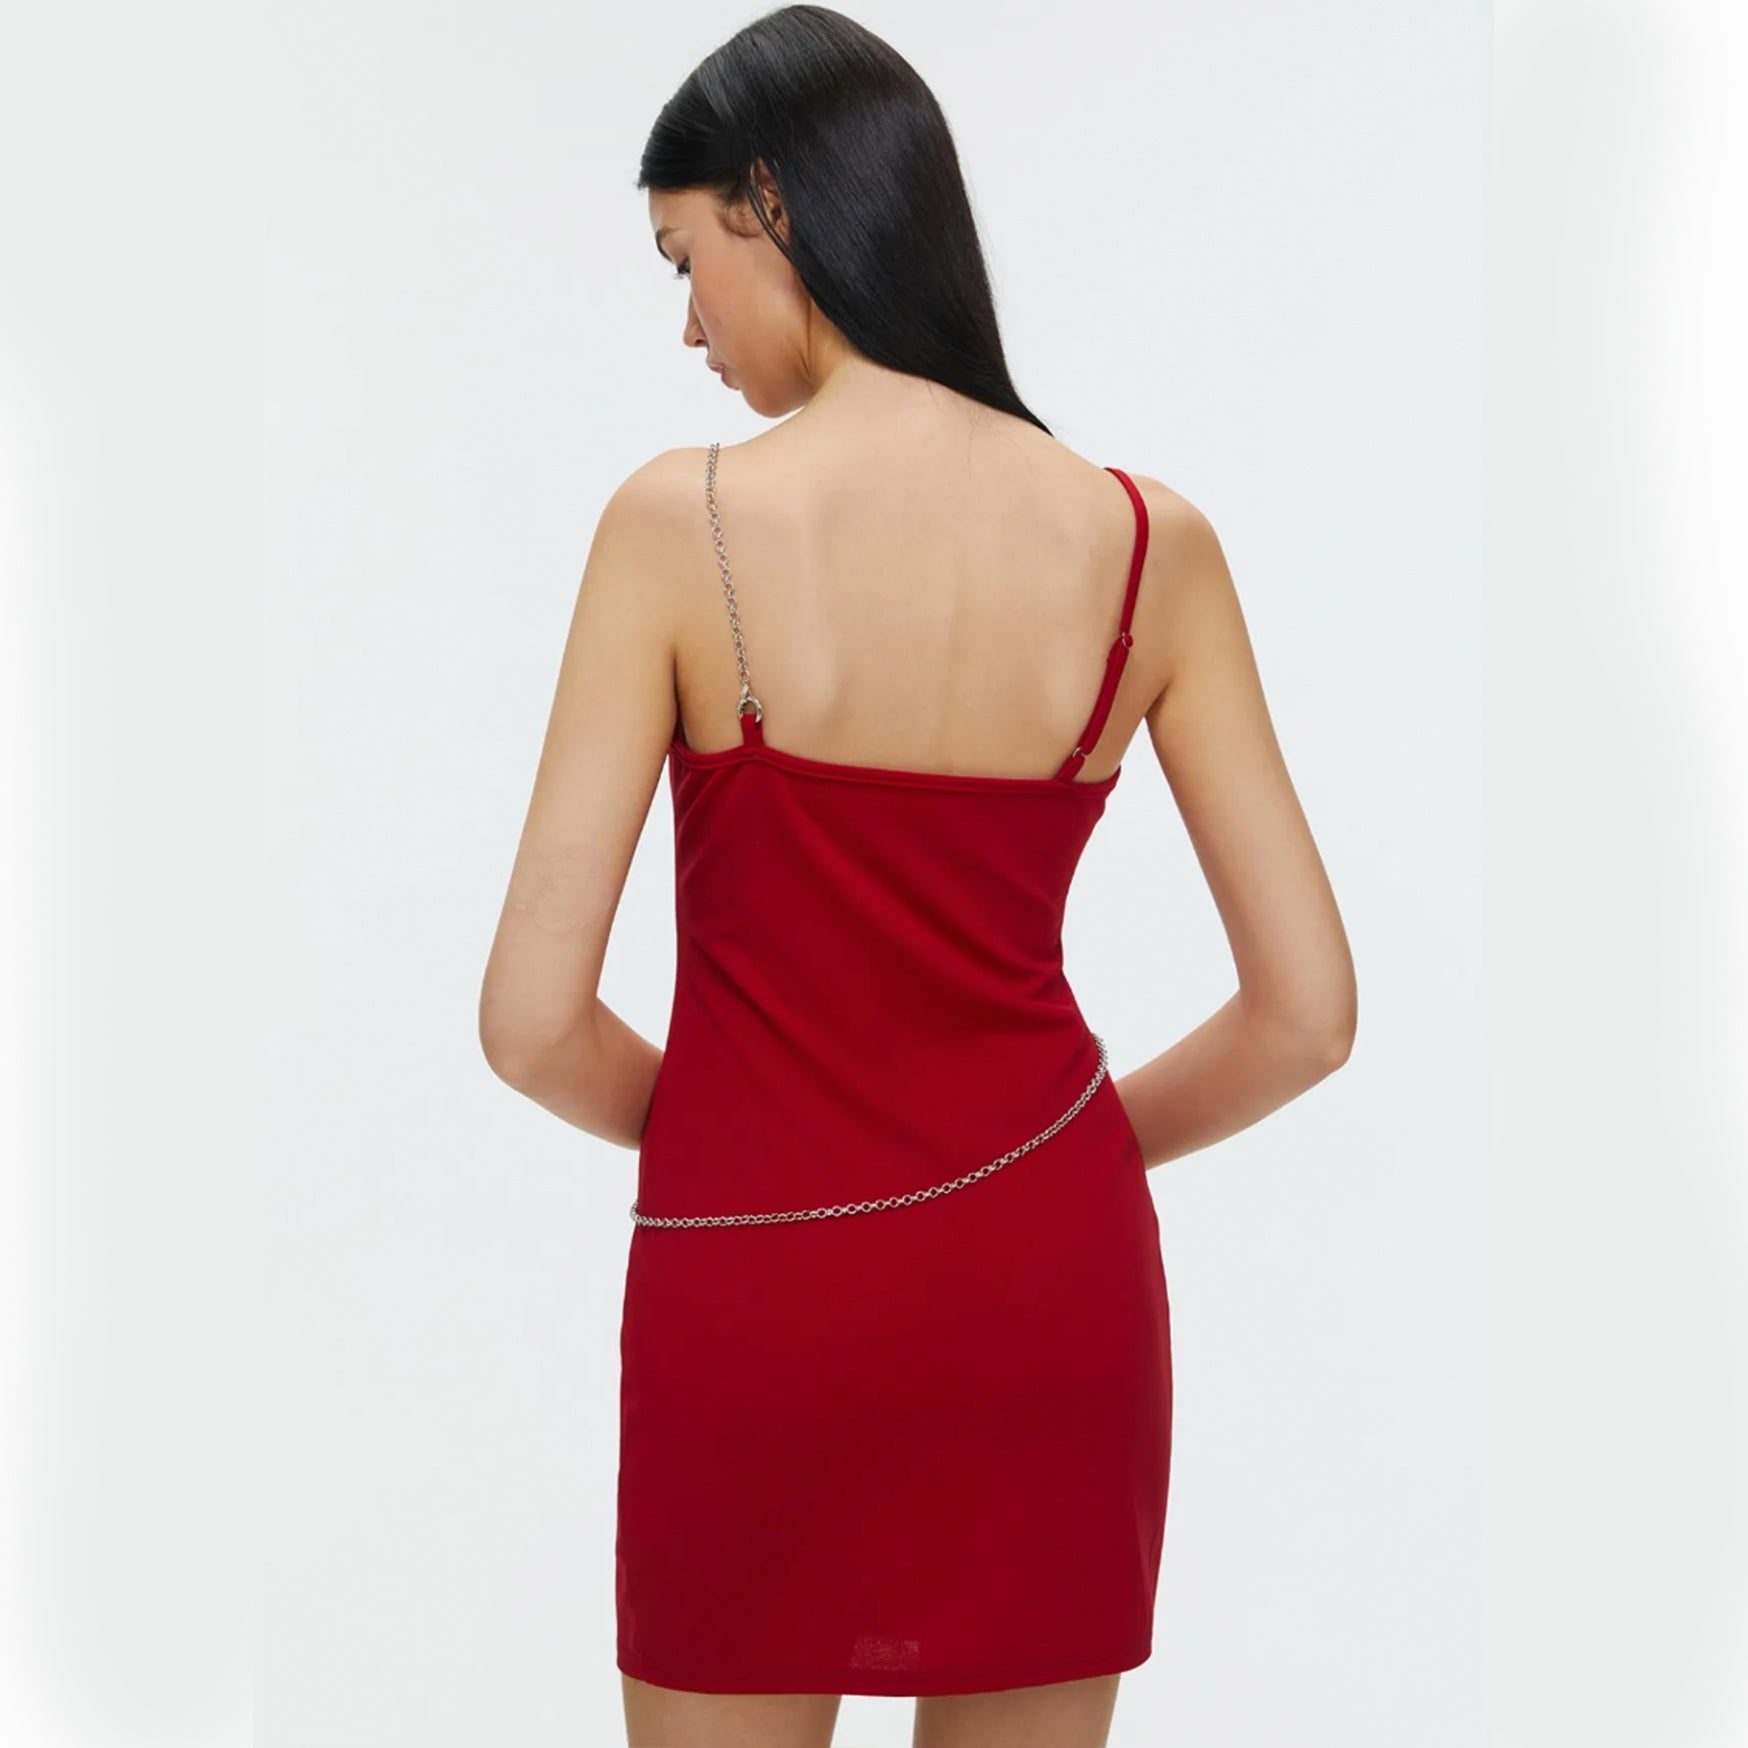 Asymmetric Short Dress With Chain Detail - Burgundy S